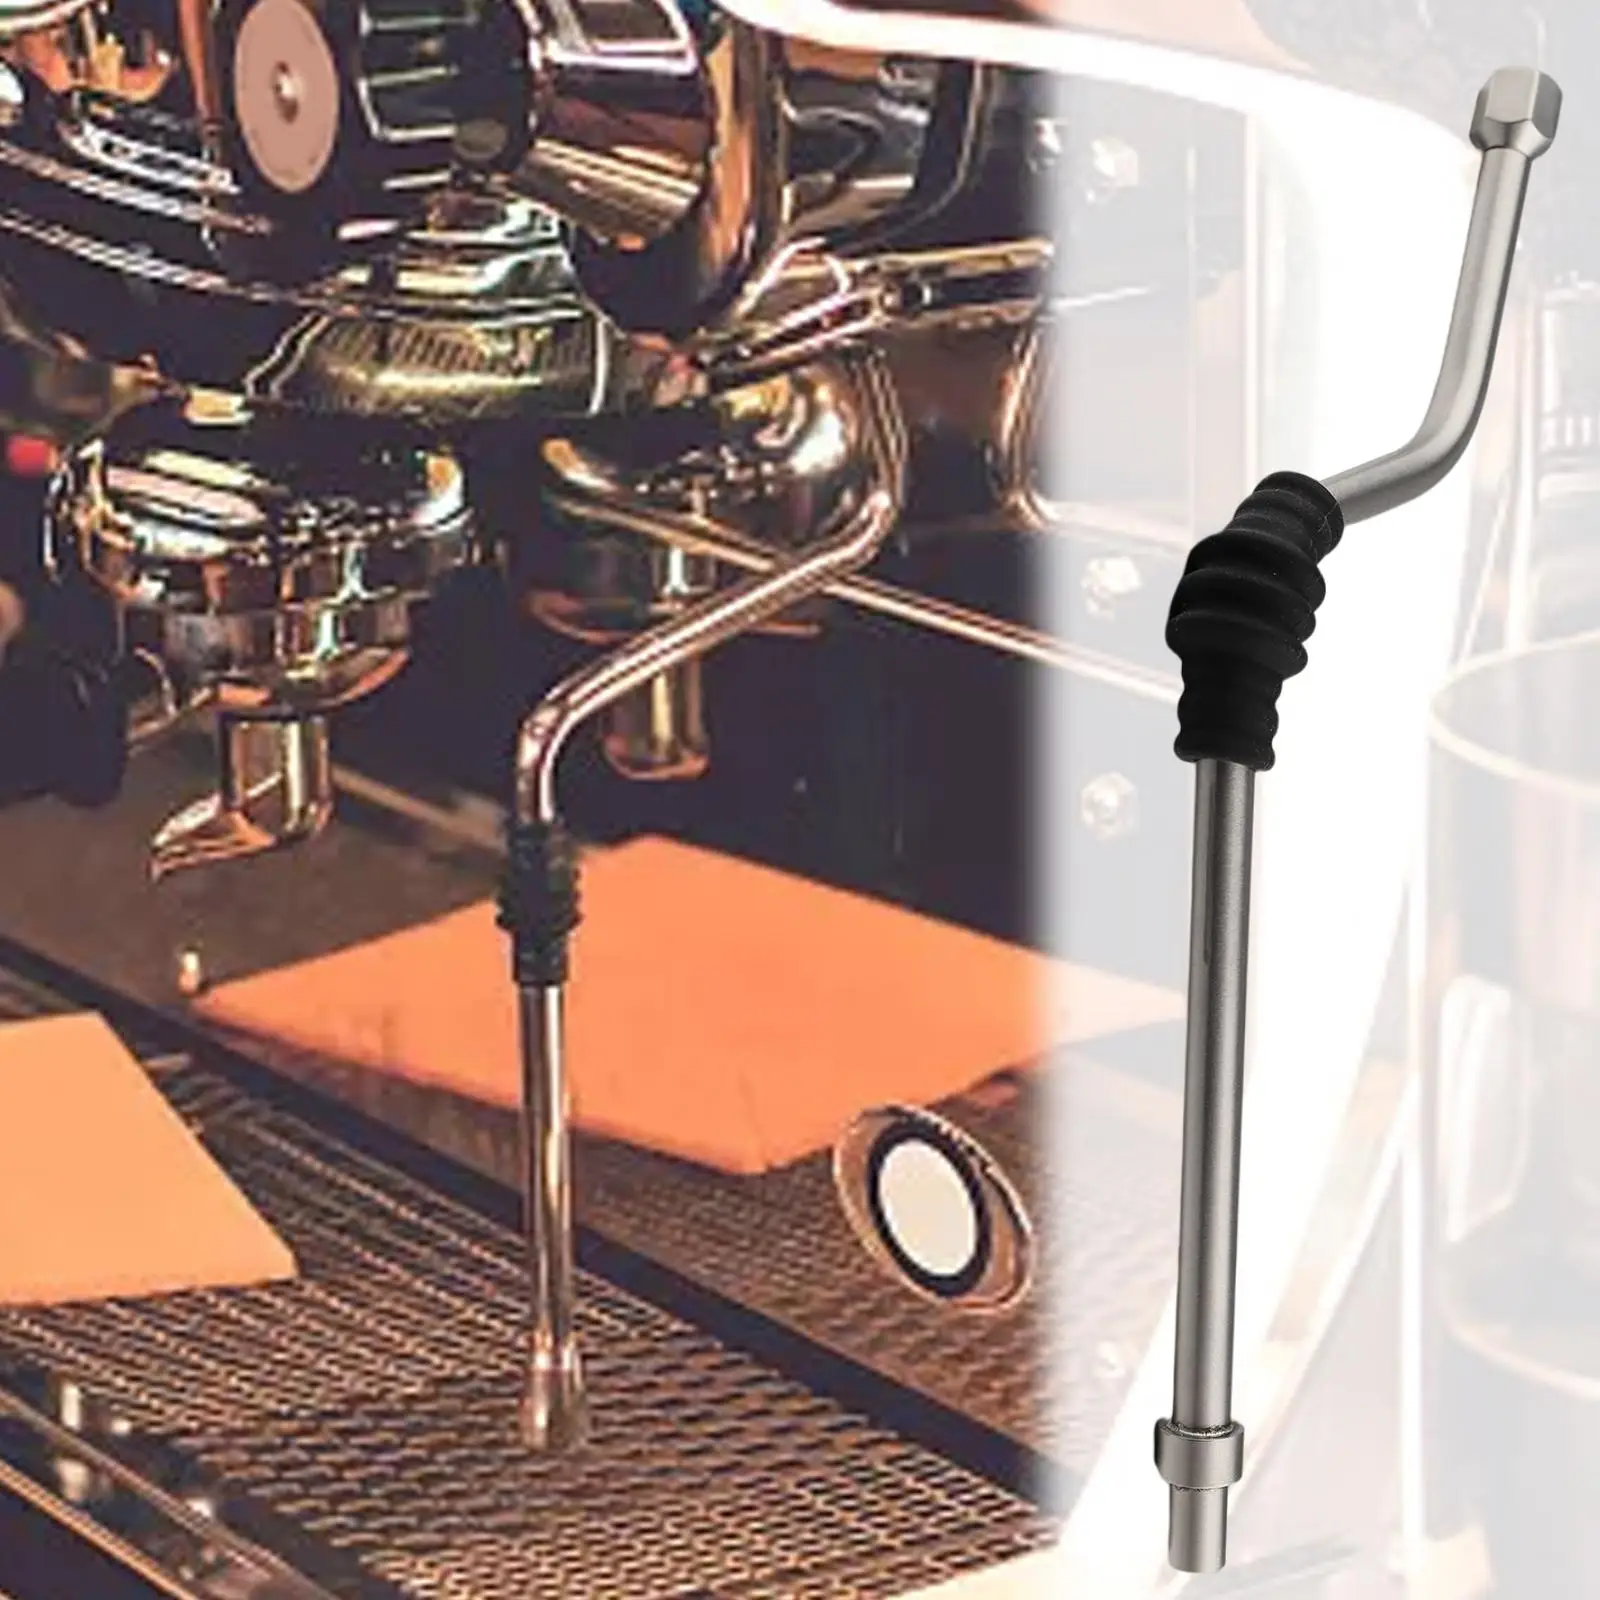 https://ae01.alicdn.com/kf/Se031b7e1820b470ca370f8571f5fadda2/Classic-Steam-Wand-Replaces-Steam-Tube-Conversion-Kit-for-Gaggia-Viva-Coffee-Espresso-Machine.jpg